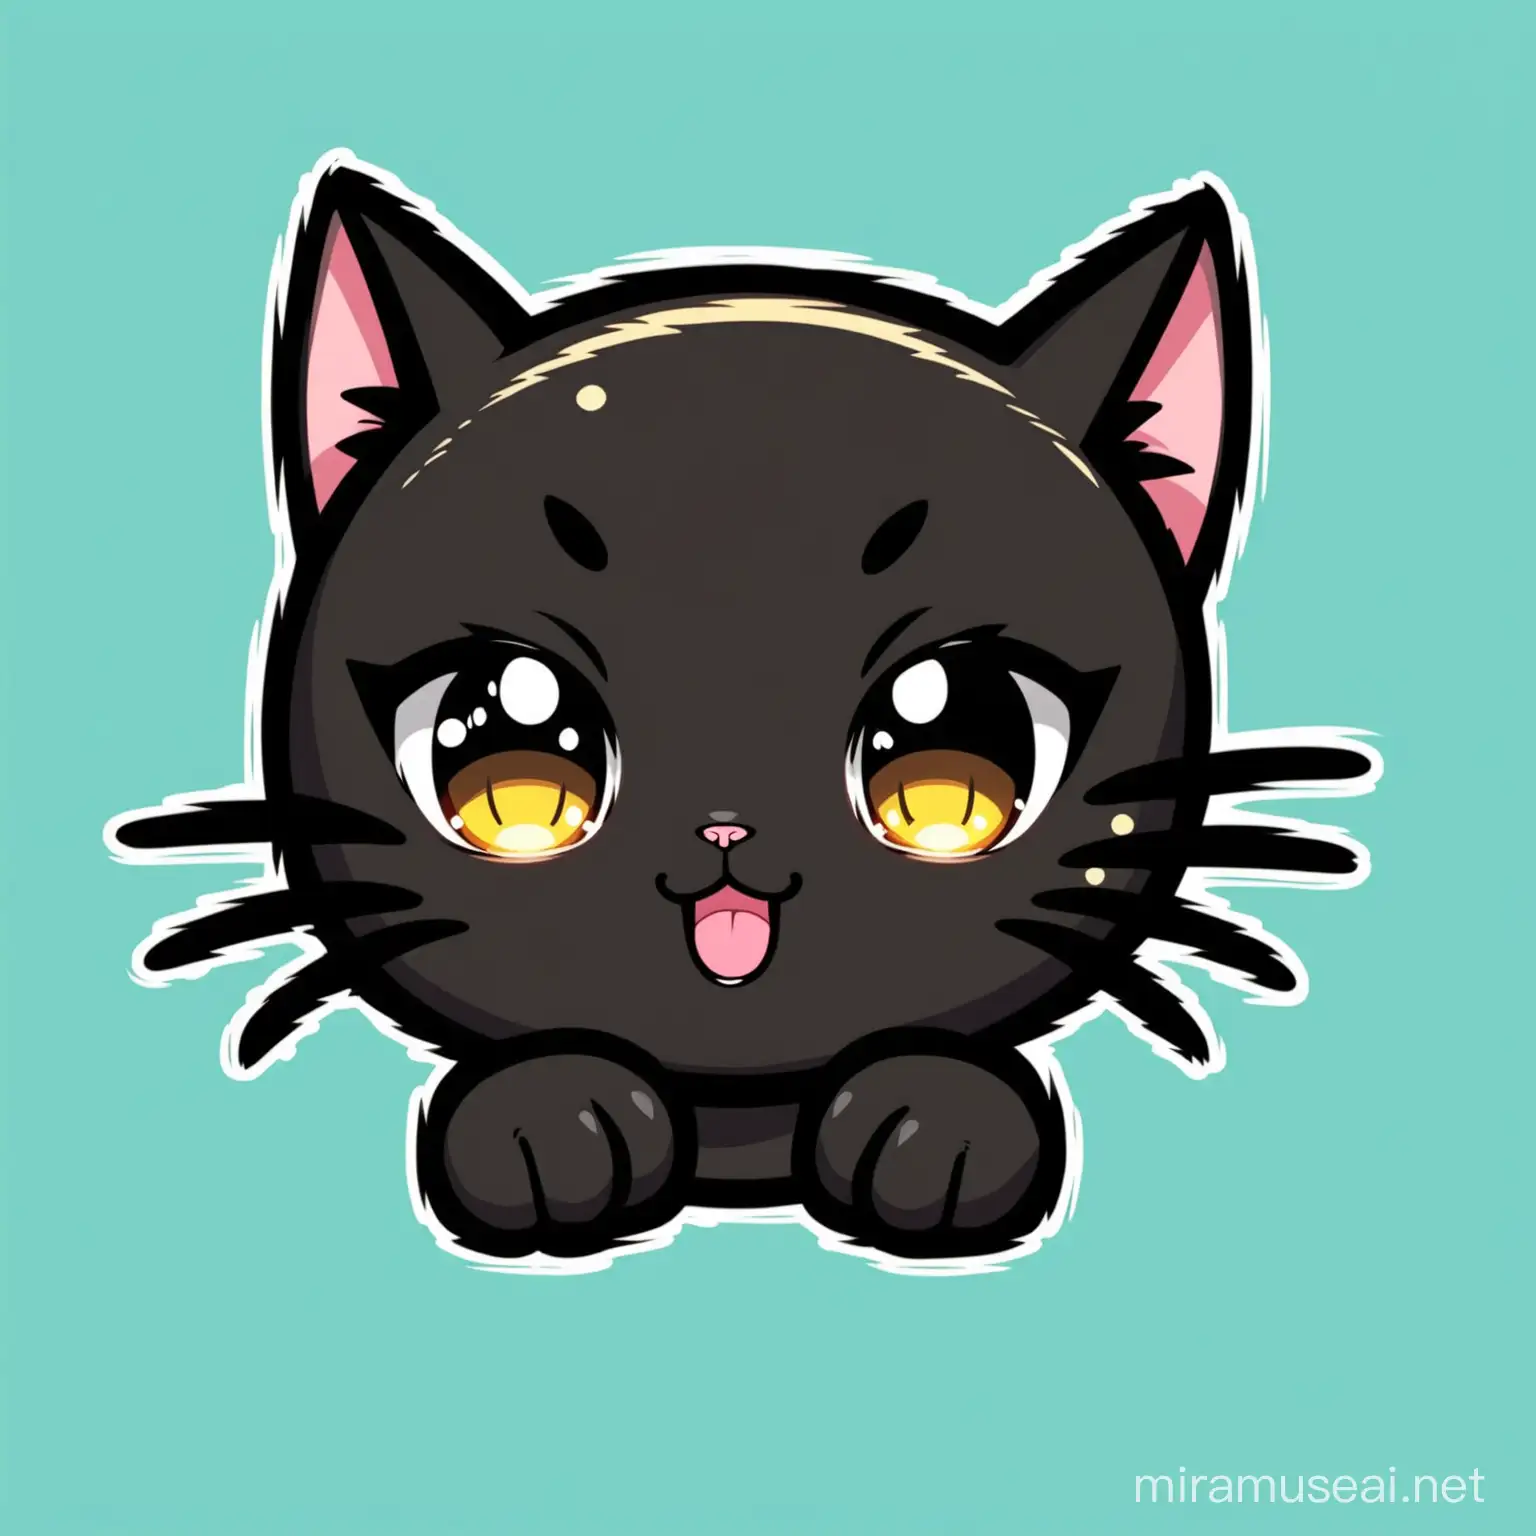 Kawaii Black Cat Peekers Shiny and Edgy Japanese Decal Art